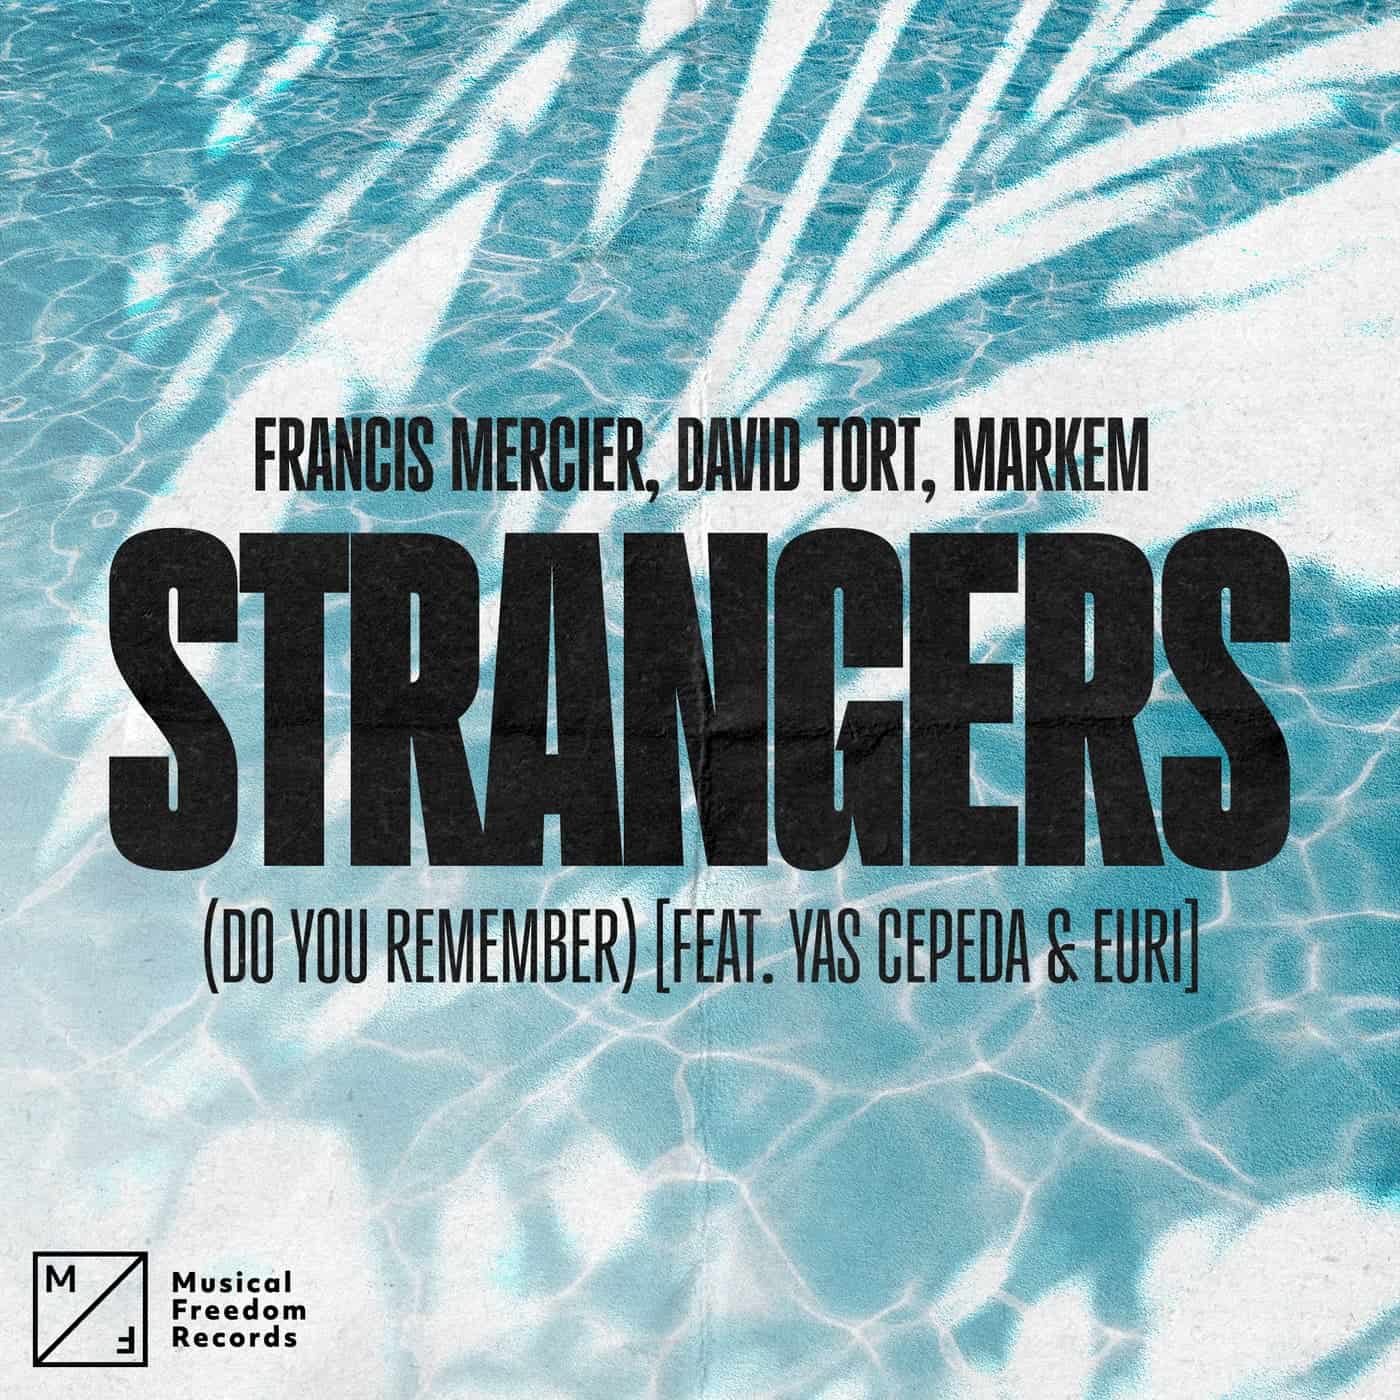 Download David Tort, Markem, Yas Cepeda, Francis Mercier, EURI - Strangers (Do You Remember) [feat. Yas Cepeda & EURI] [Extended Mix] on Electrobuzz